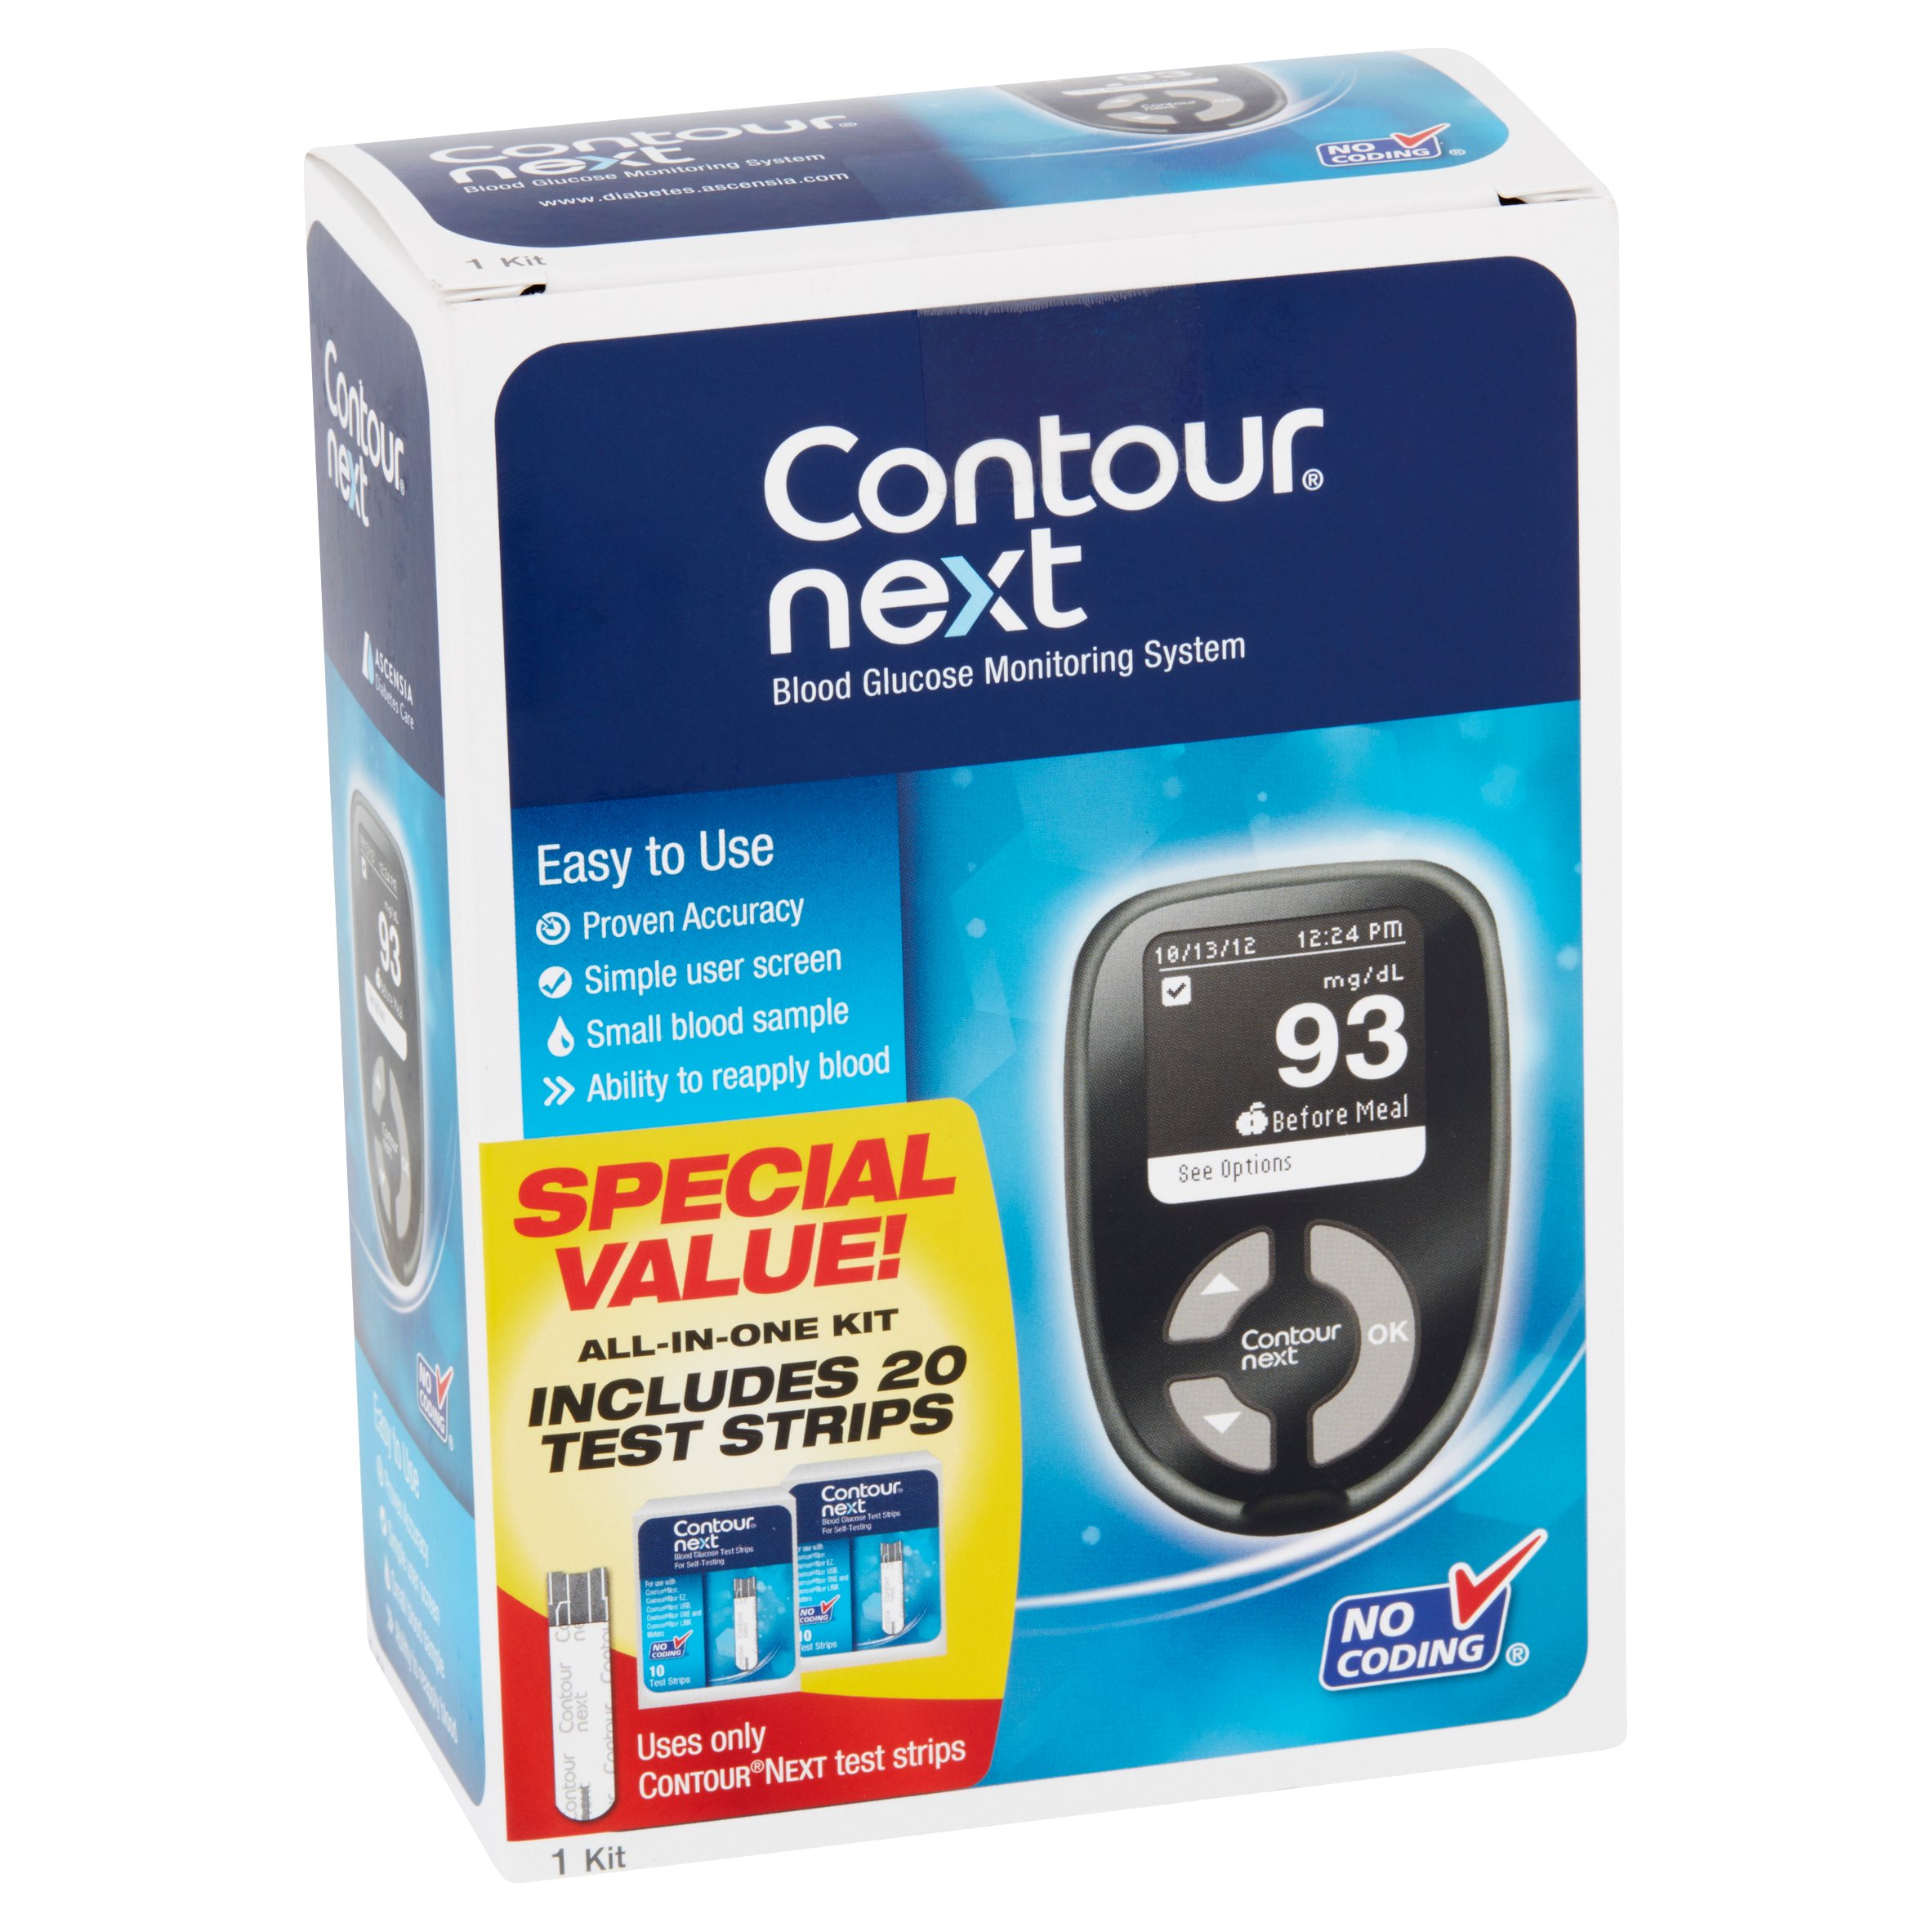 Contour Next Blood Glucose Monitoring System, 1 Kit - image 2 of 5